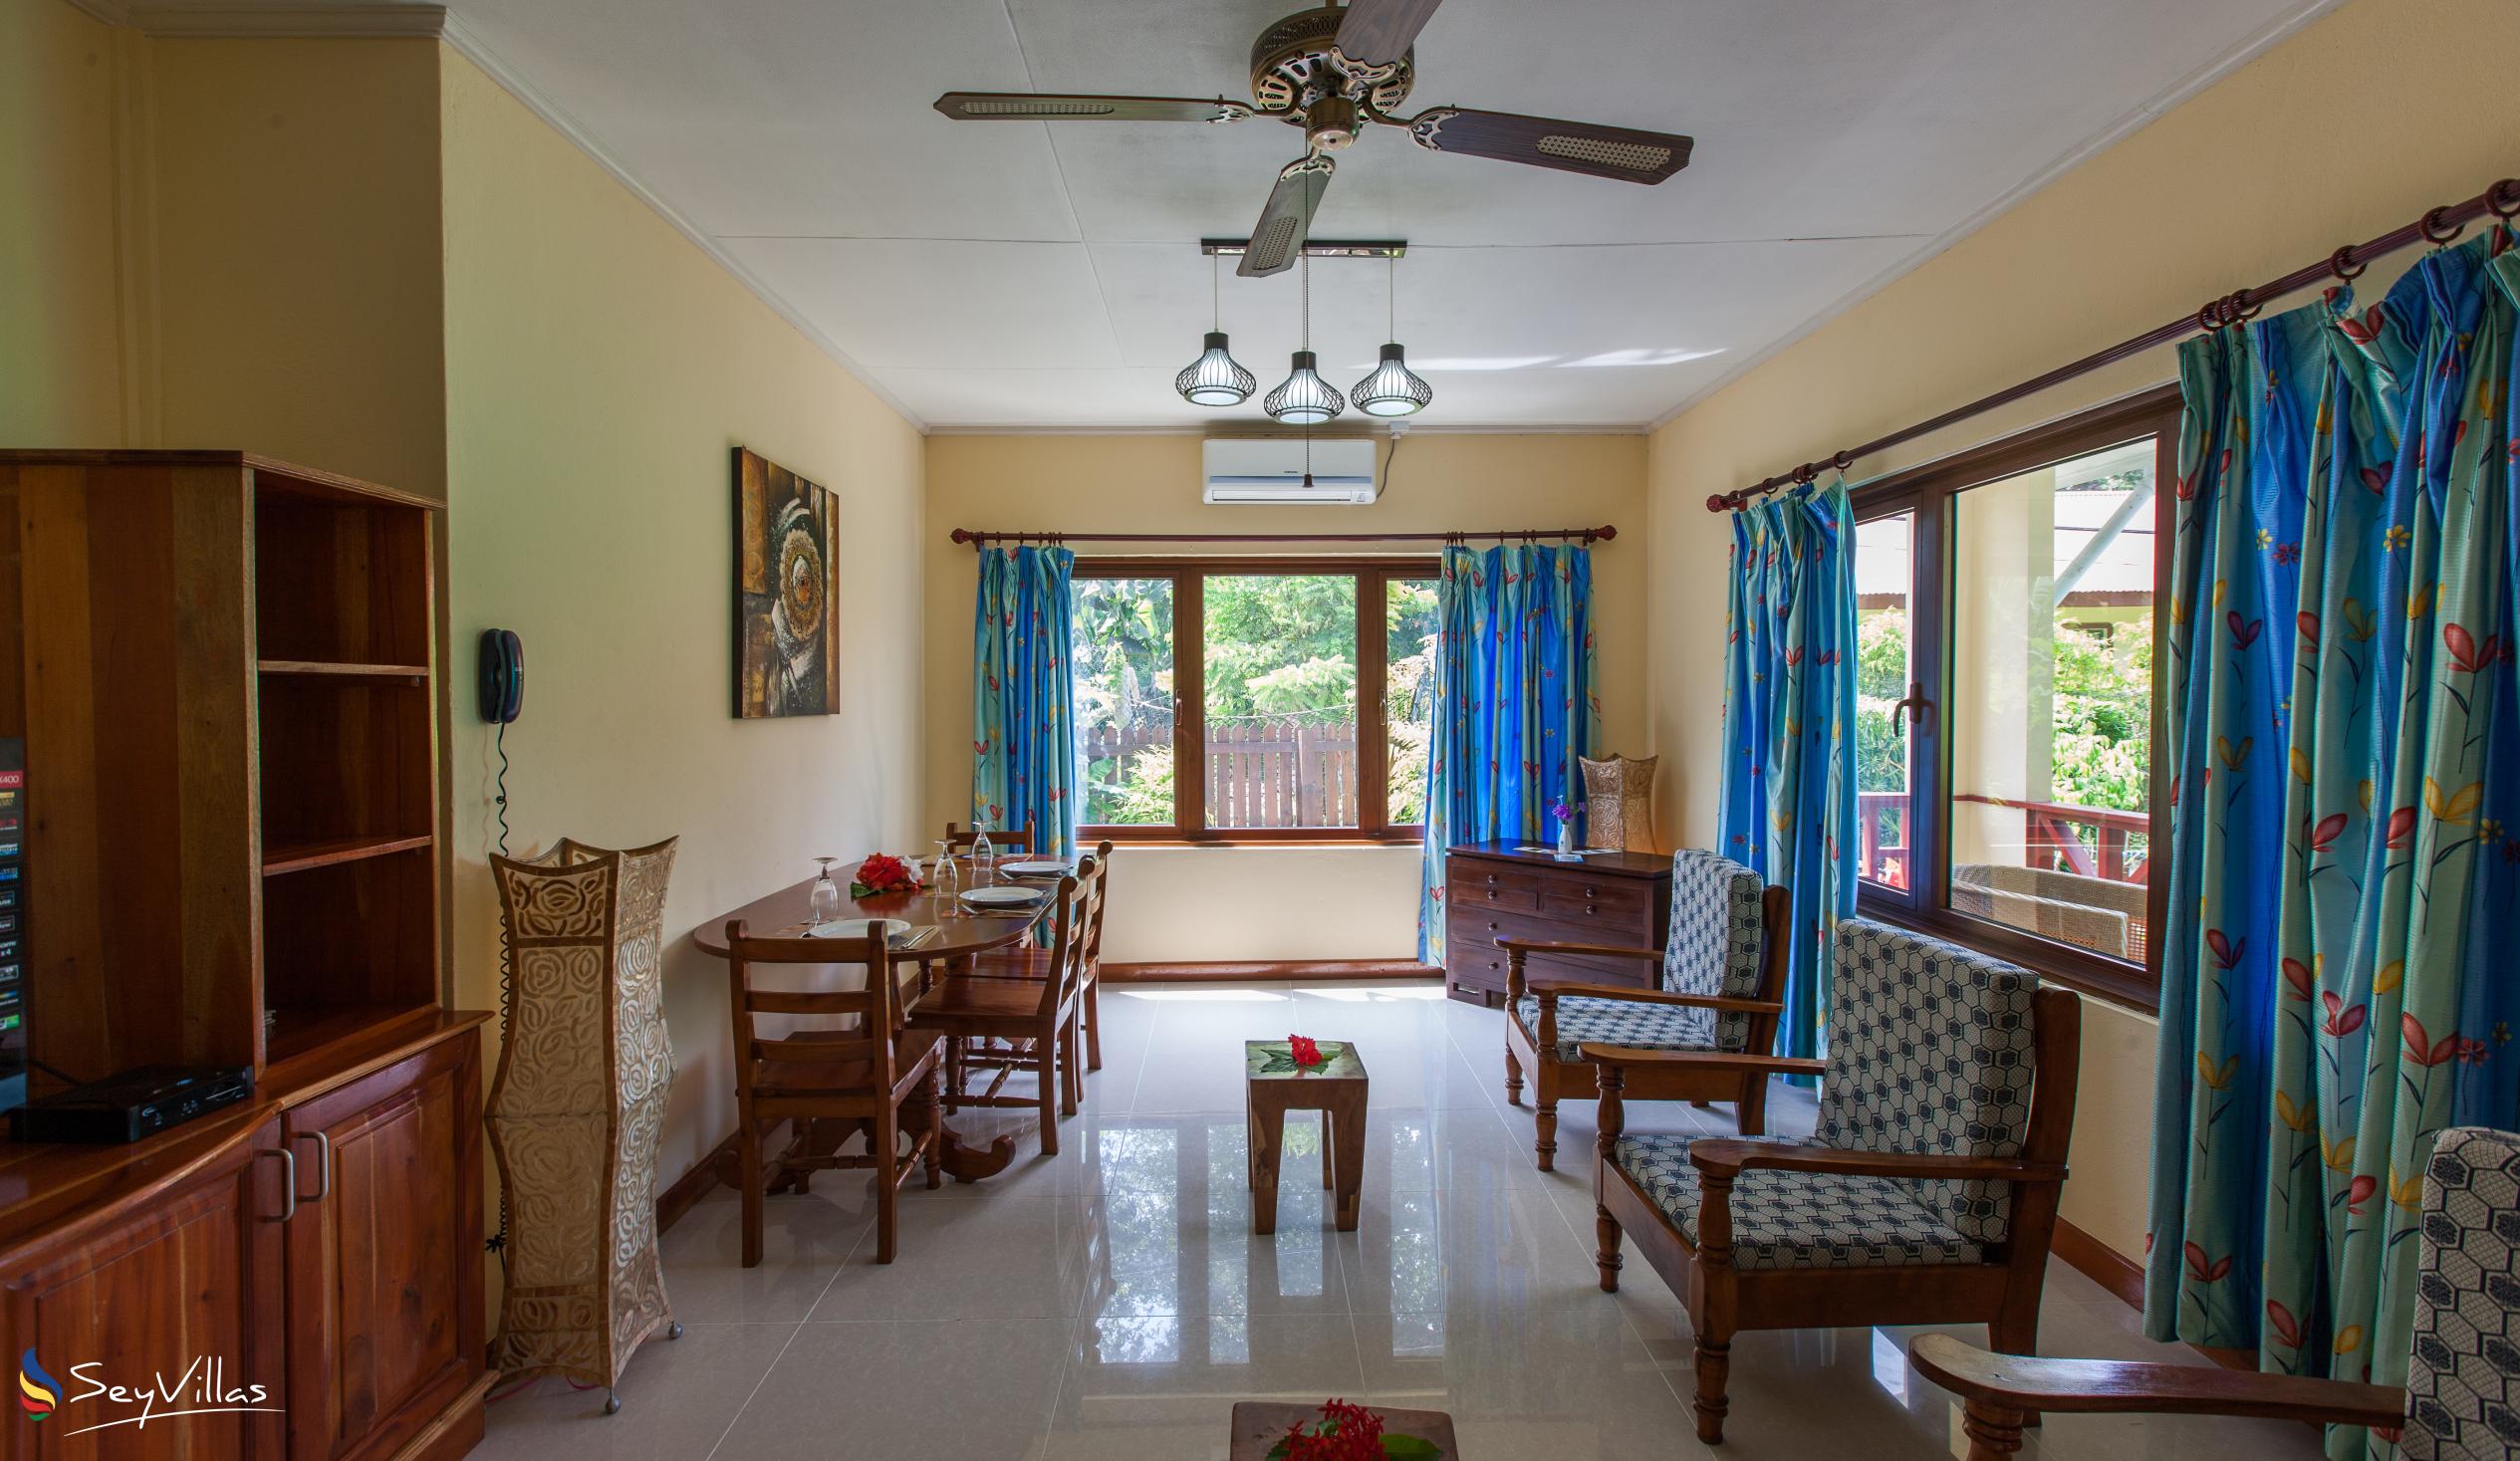 Foto 43: Le Relax Self Catering - Appartamento Superior - La Digue (Seychelles)